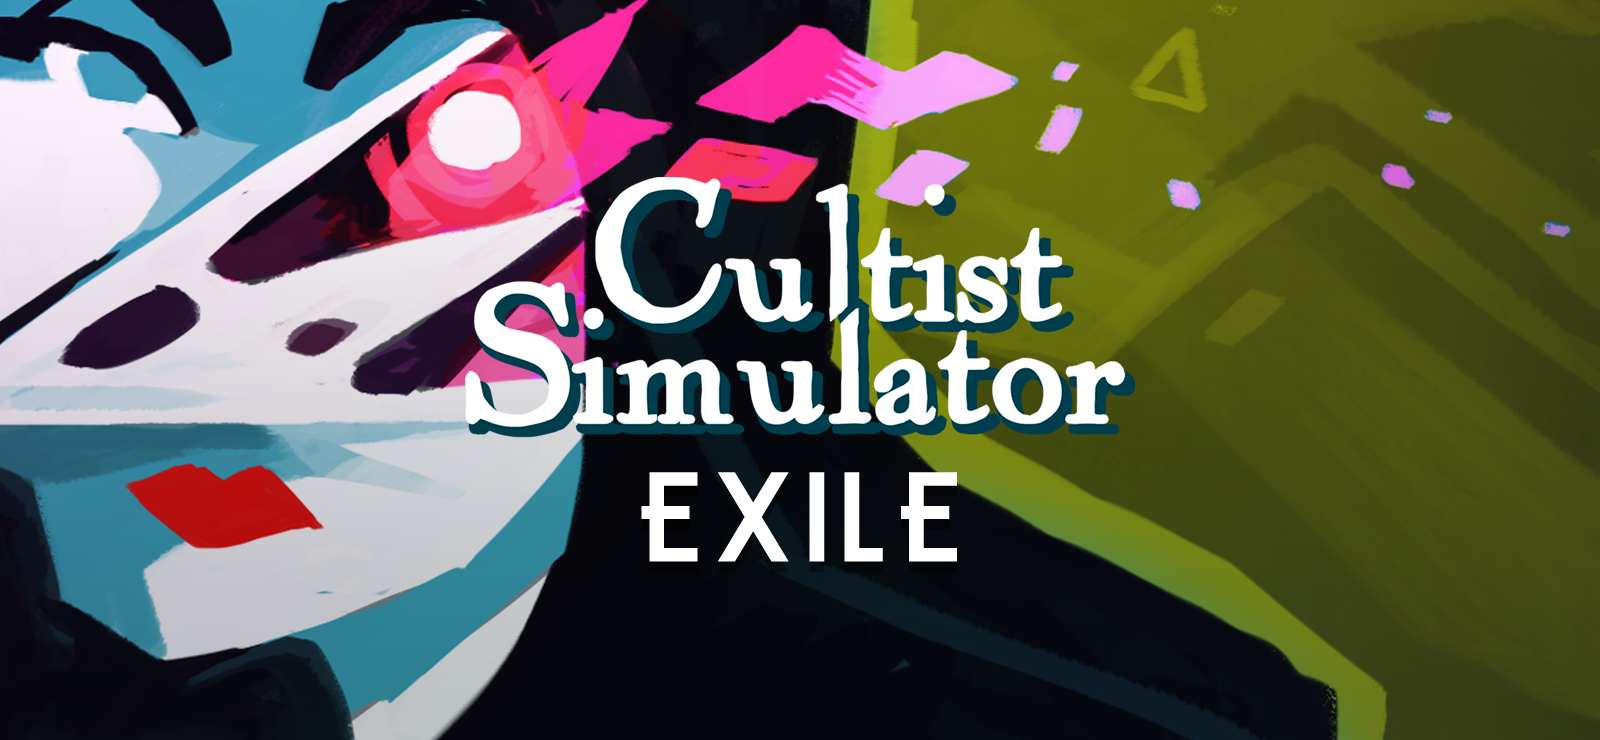 Cultist Simulator: The Exile